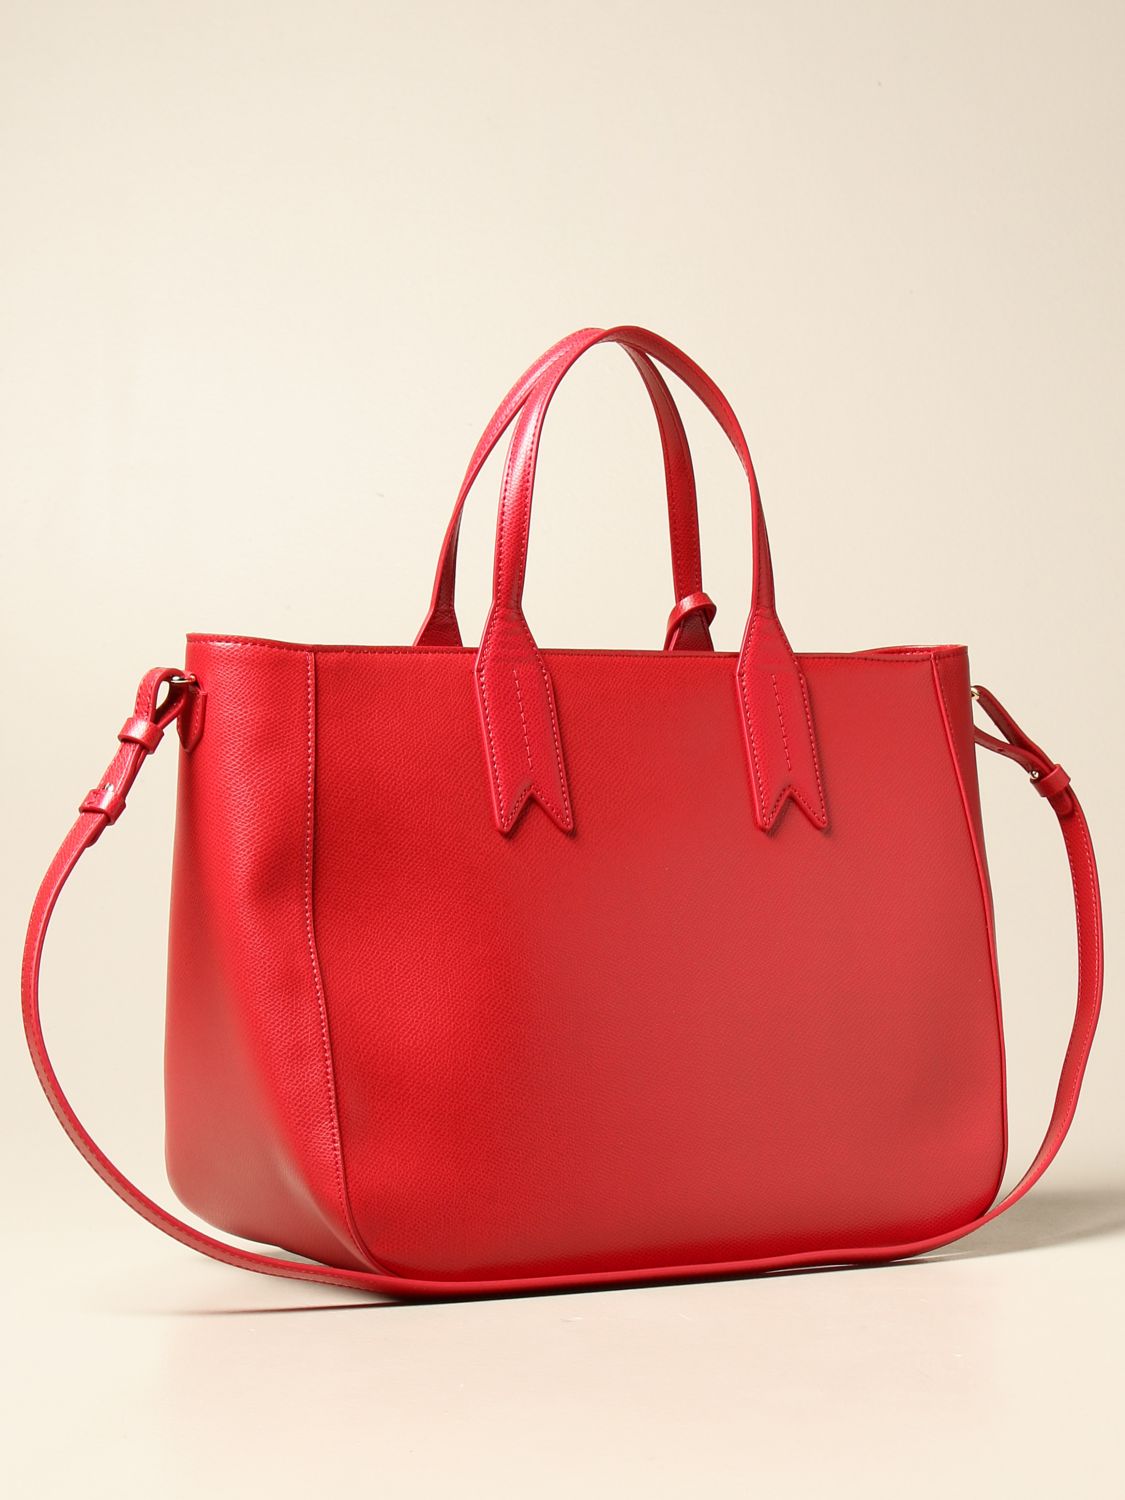 Emporio Armani Outlet: handbag for woman - Red | Emporio Armani handbag ...